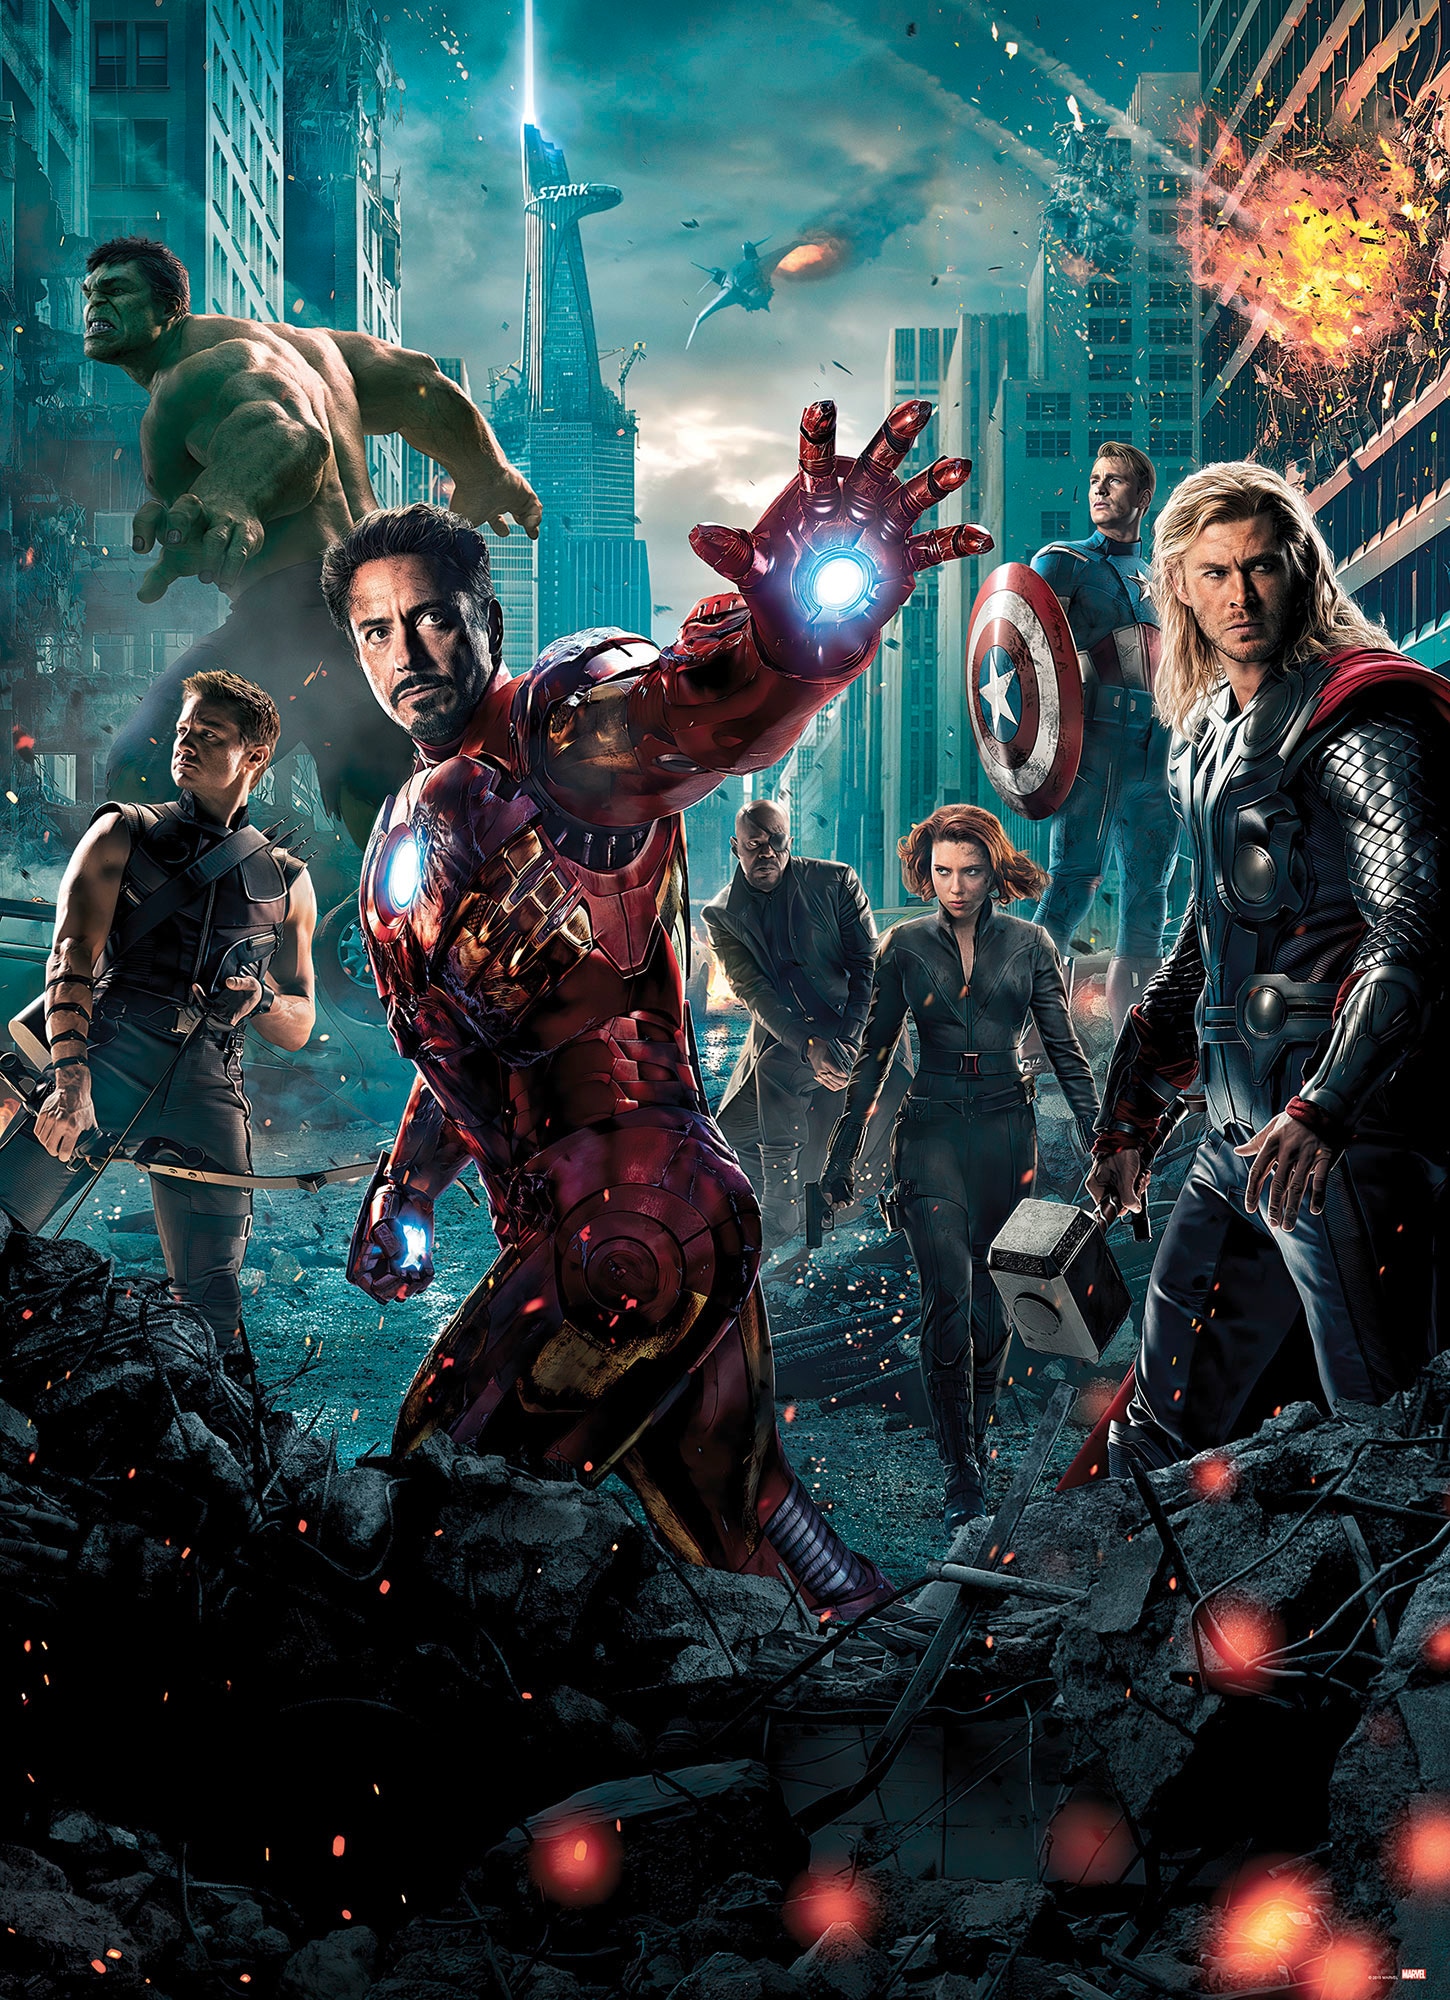 Fototapete »Avengers Movie Poster«, 184x254 cm (Breite x Höhe), inklusive Kleister